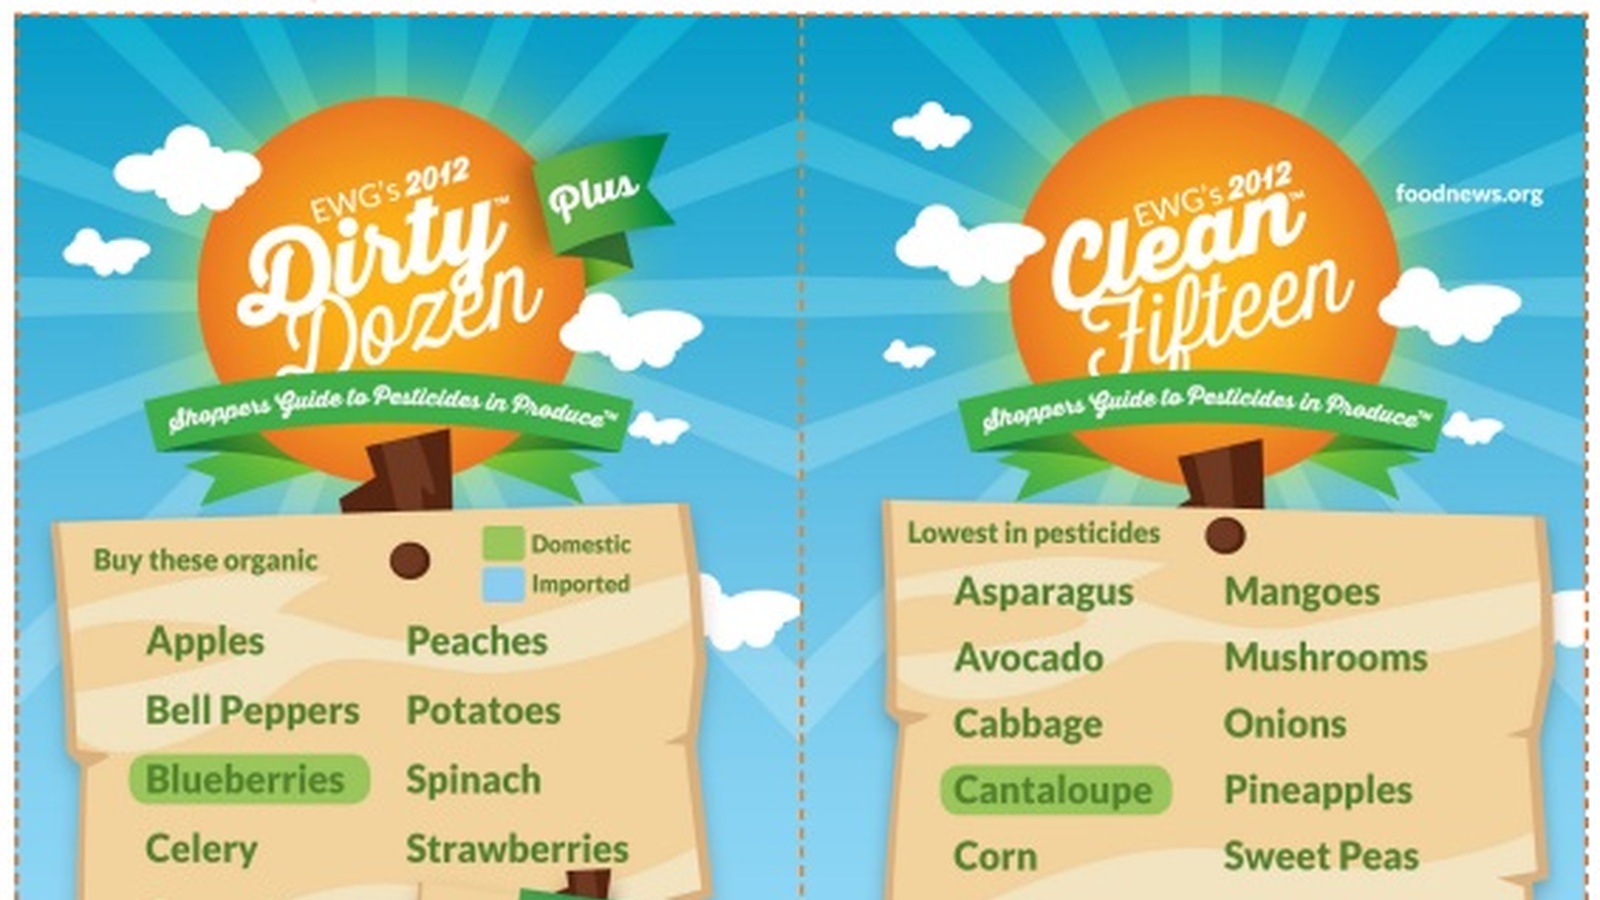 2012 Shopper's Guide to Pesticides- The Dirty Dozen & Clean 15